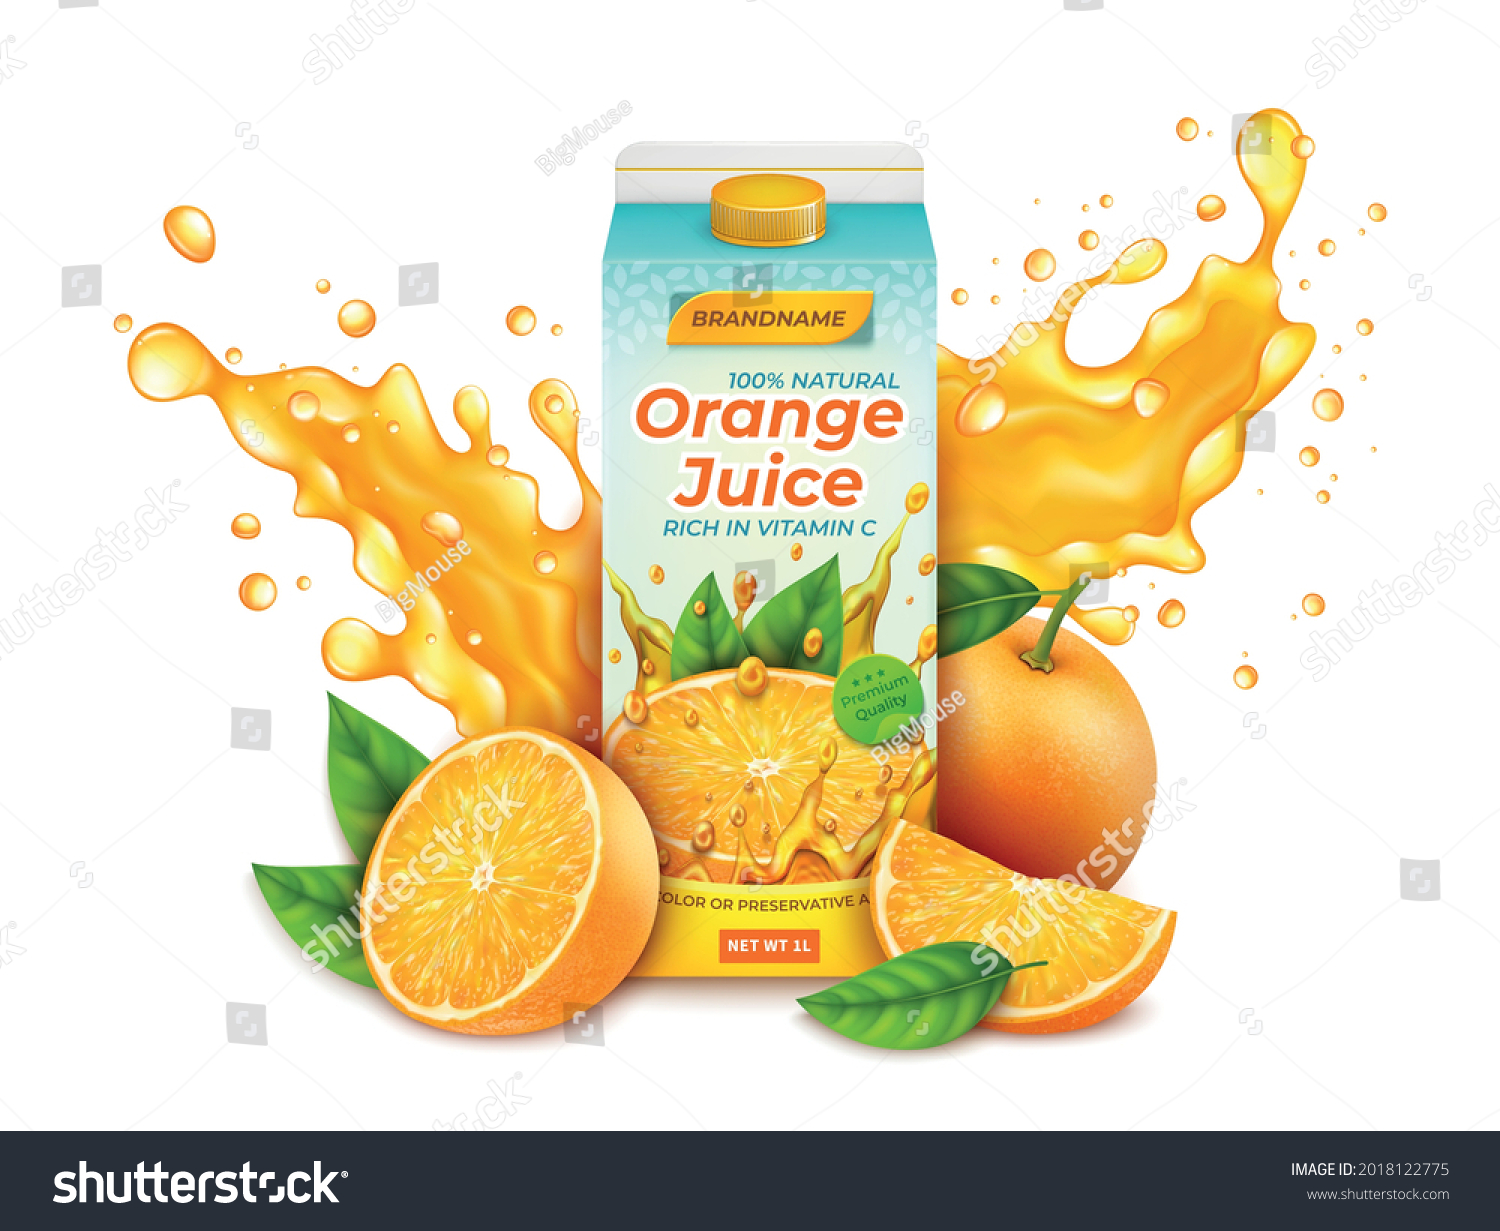 SVG of Realistic Detailed 3d Orange Juice Pack with Citrus Fruit and Splash. Vector illustration of Citrus Carton Package Box svg